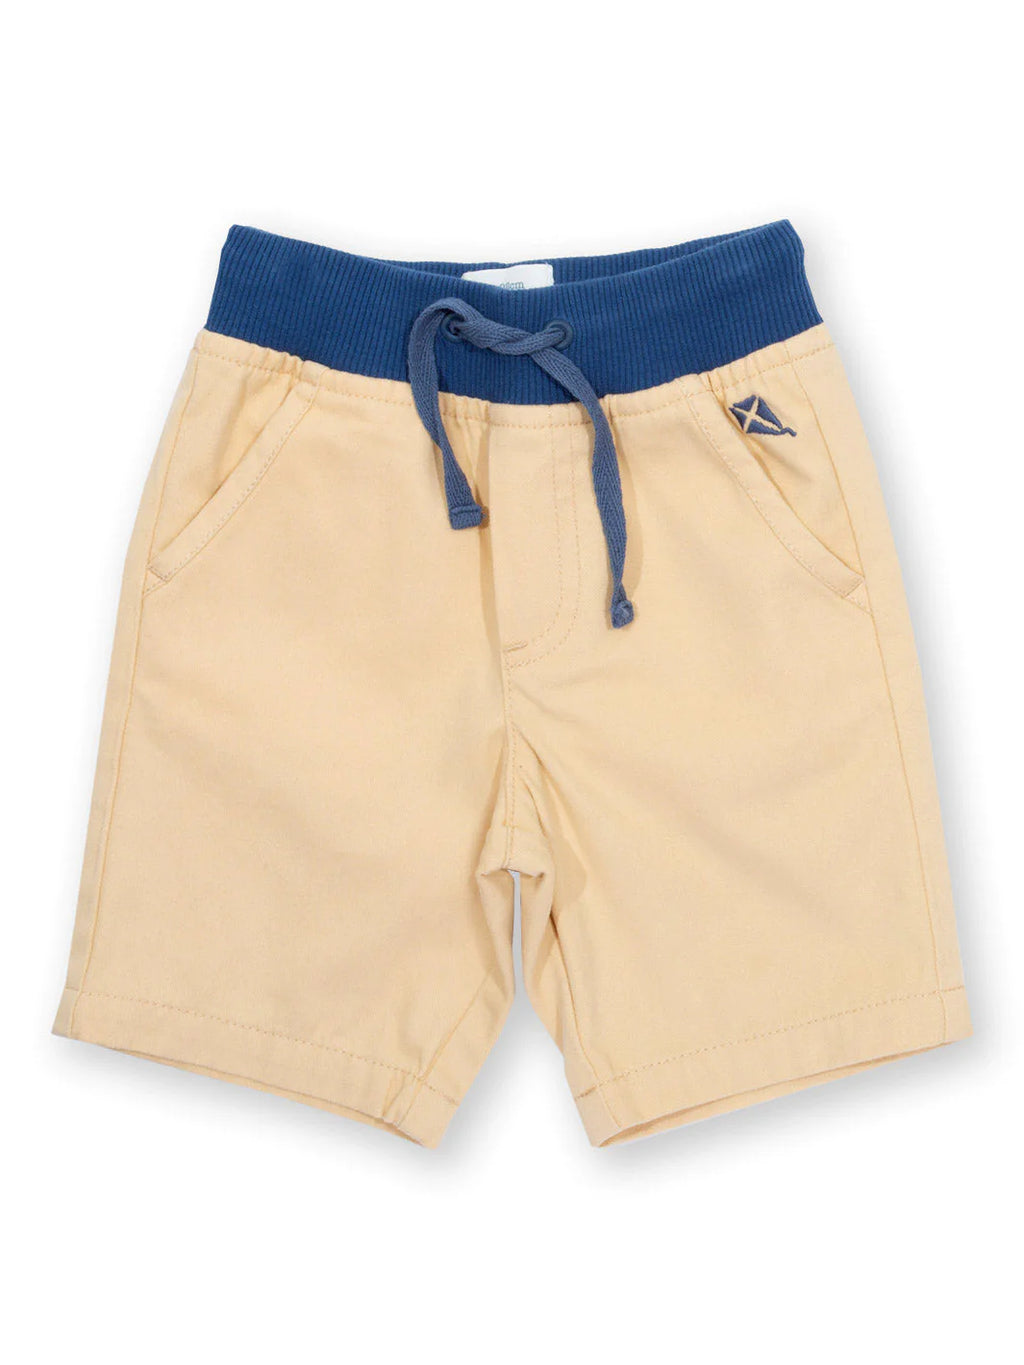 Kite Clothing Yacht Boys Stone Shorts